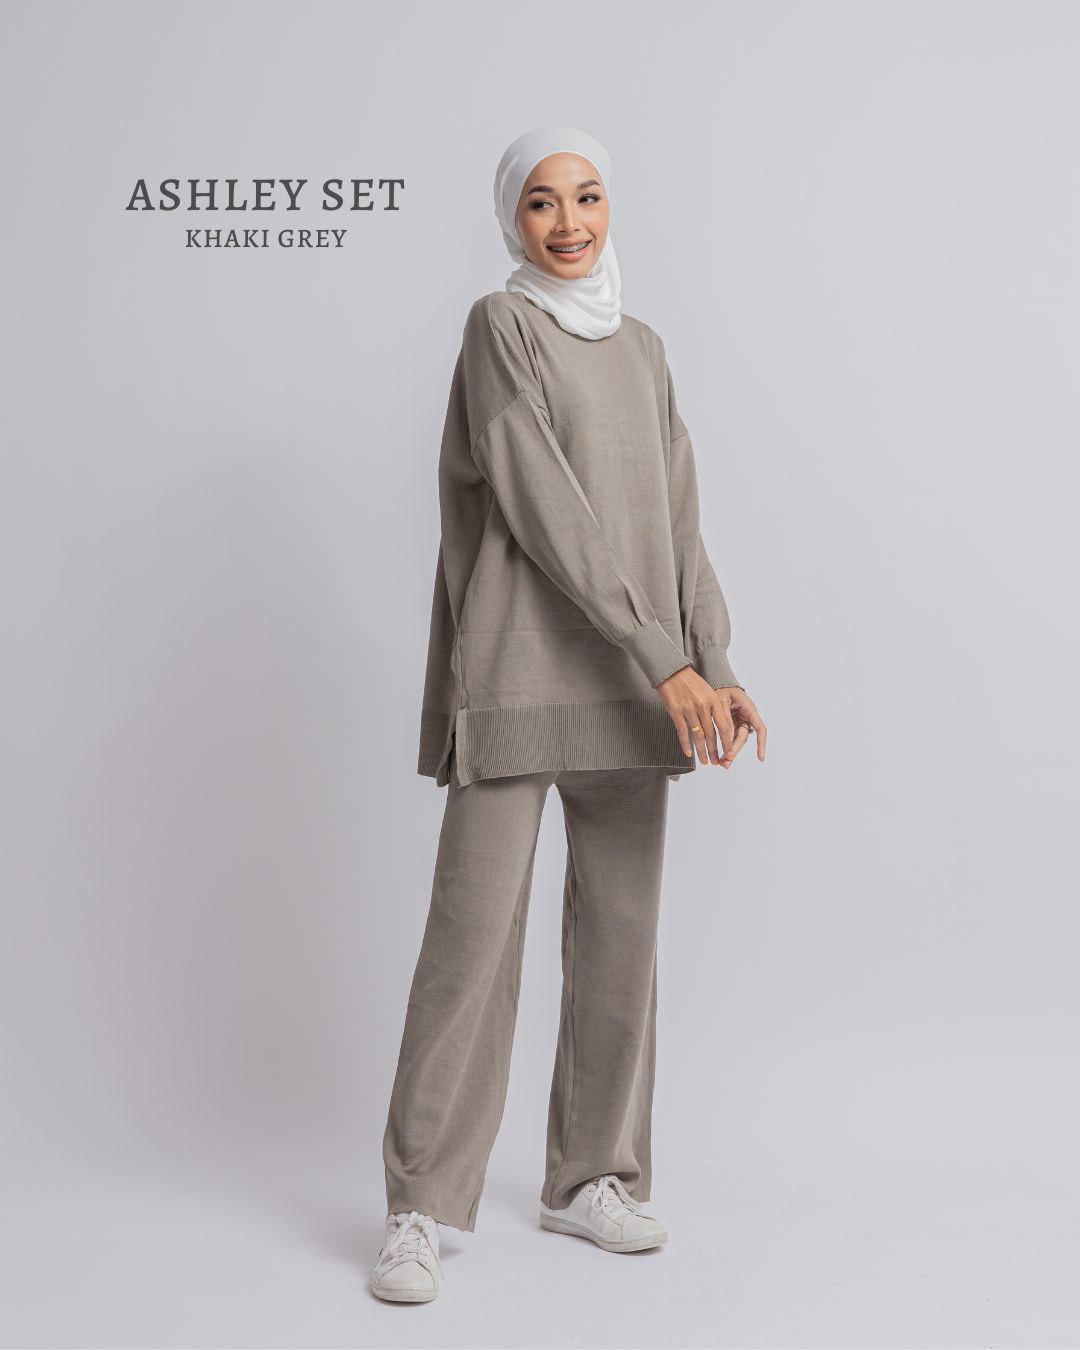 haura-wear-cotton-baju-muslimah-set-seluar-suit-muslimah-set-baju-dan-seluar-muslimah-palazzo (17)